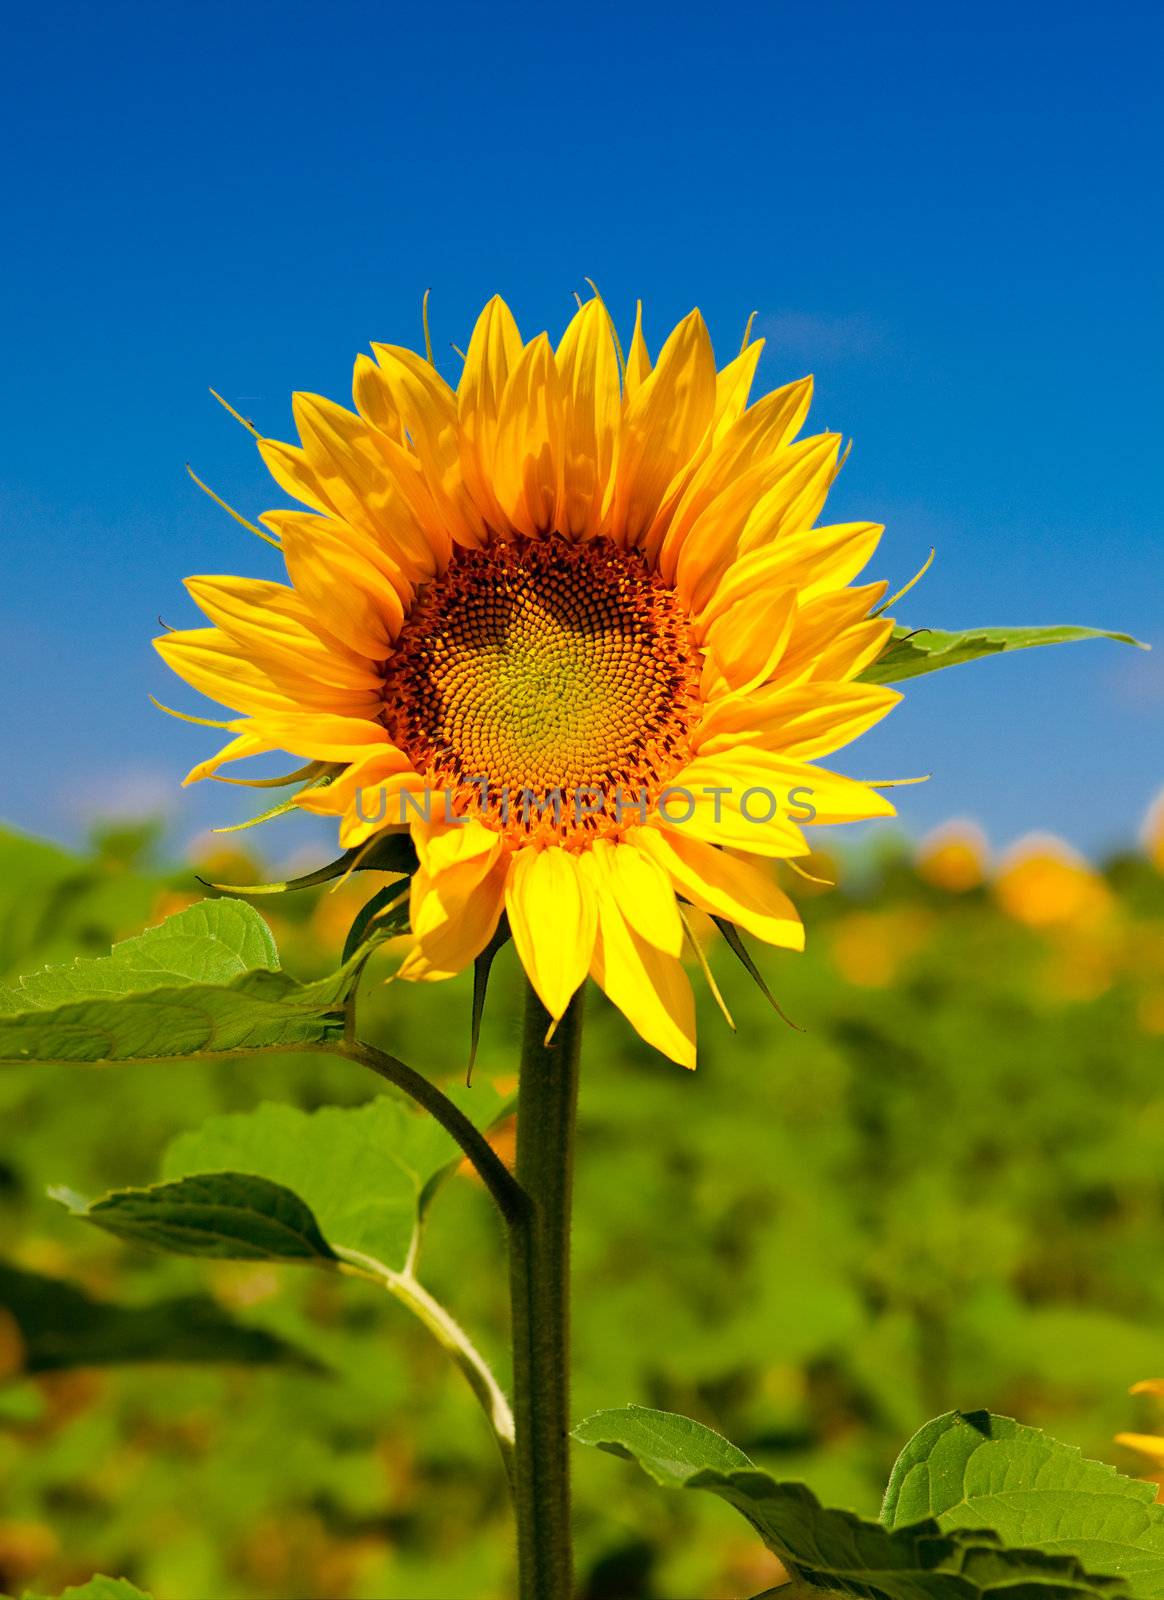 Sunflowers by Iko